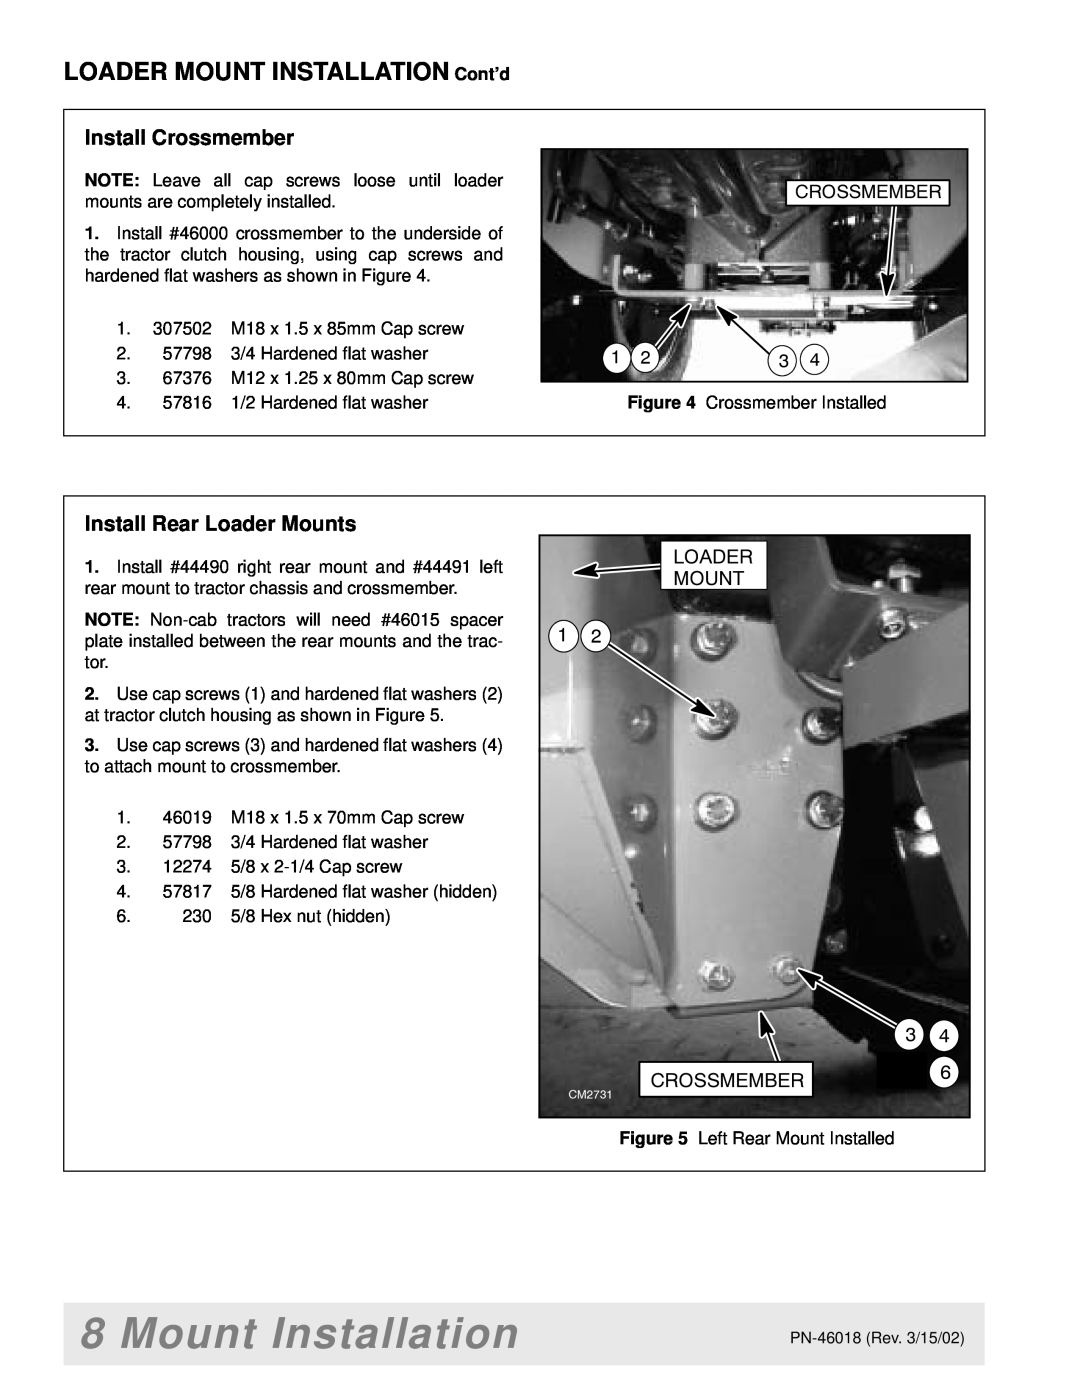 Woods Equipment M8200 manual Mount Installation, LOADER MOUNT INSTALLATION Cont’d, 02817, 526600%5 